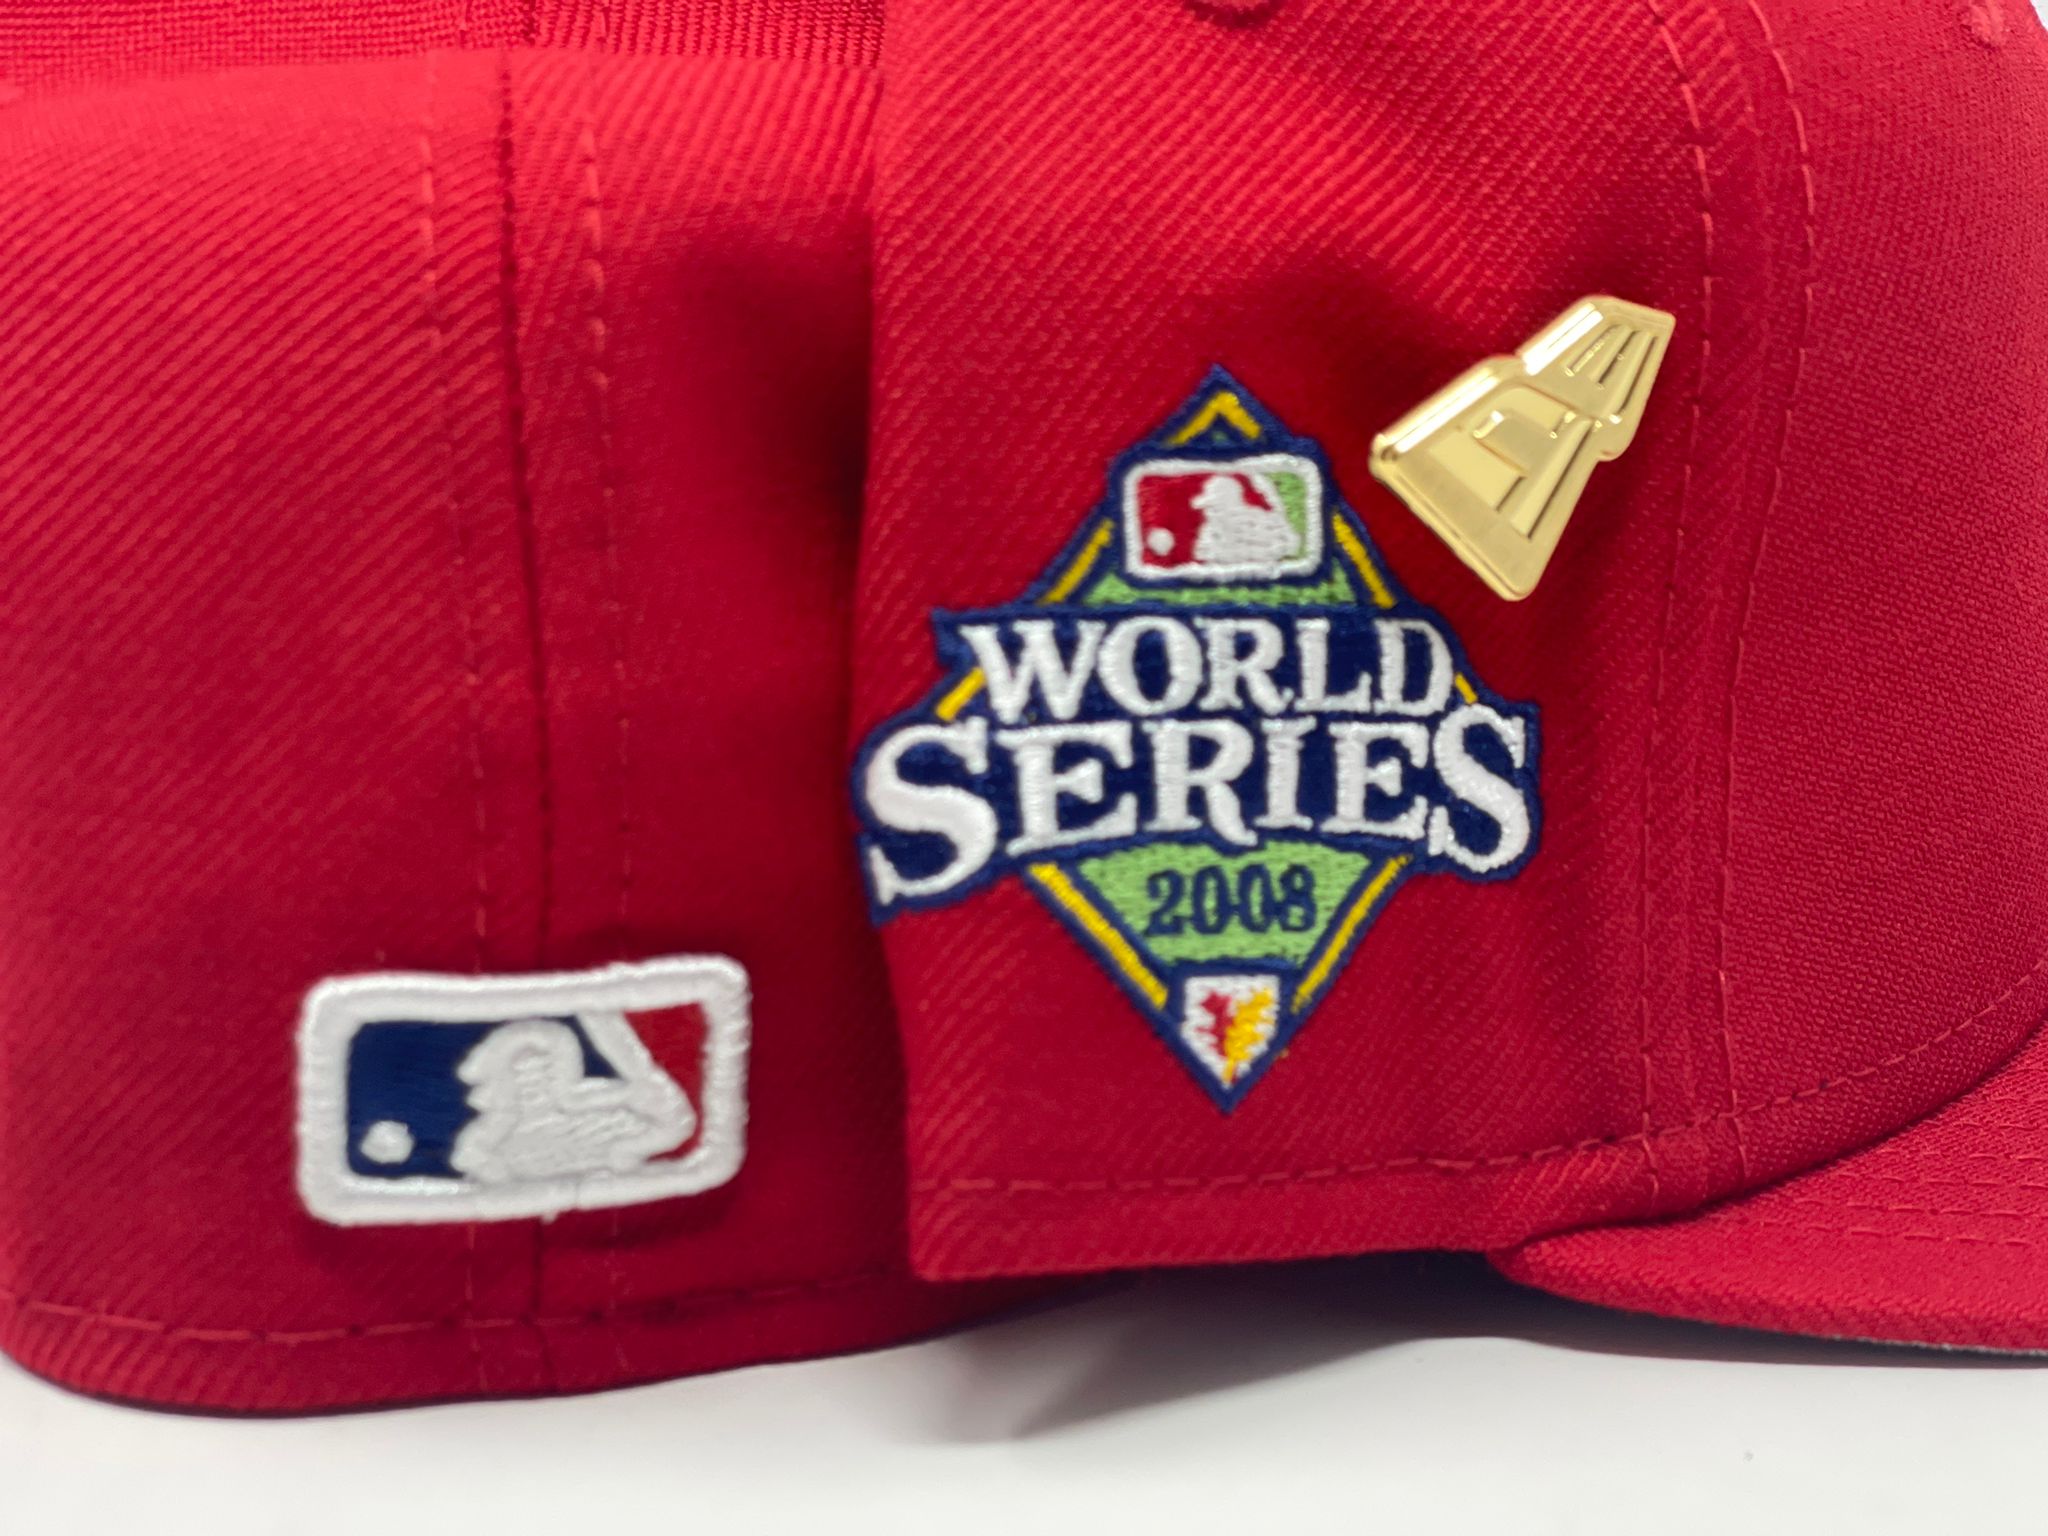 2008 Philadelphia Phillies World Series Game Used Baseball Hat Cap